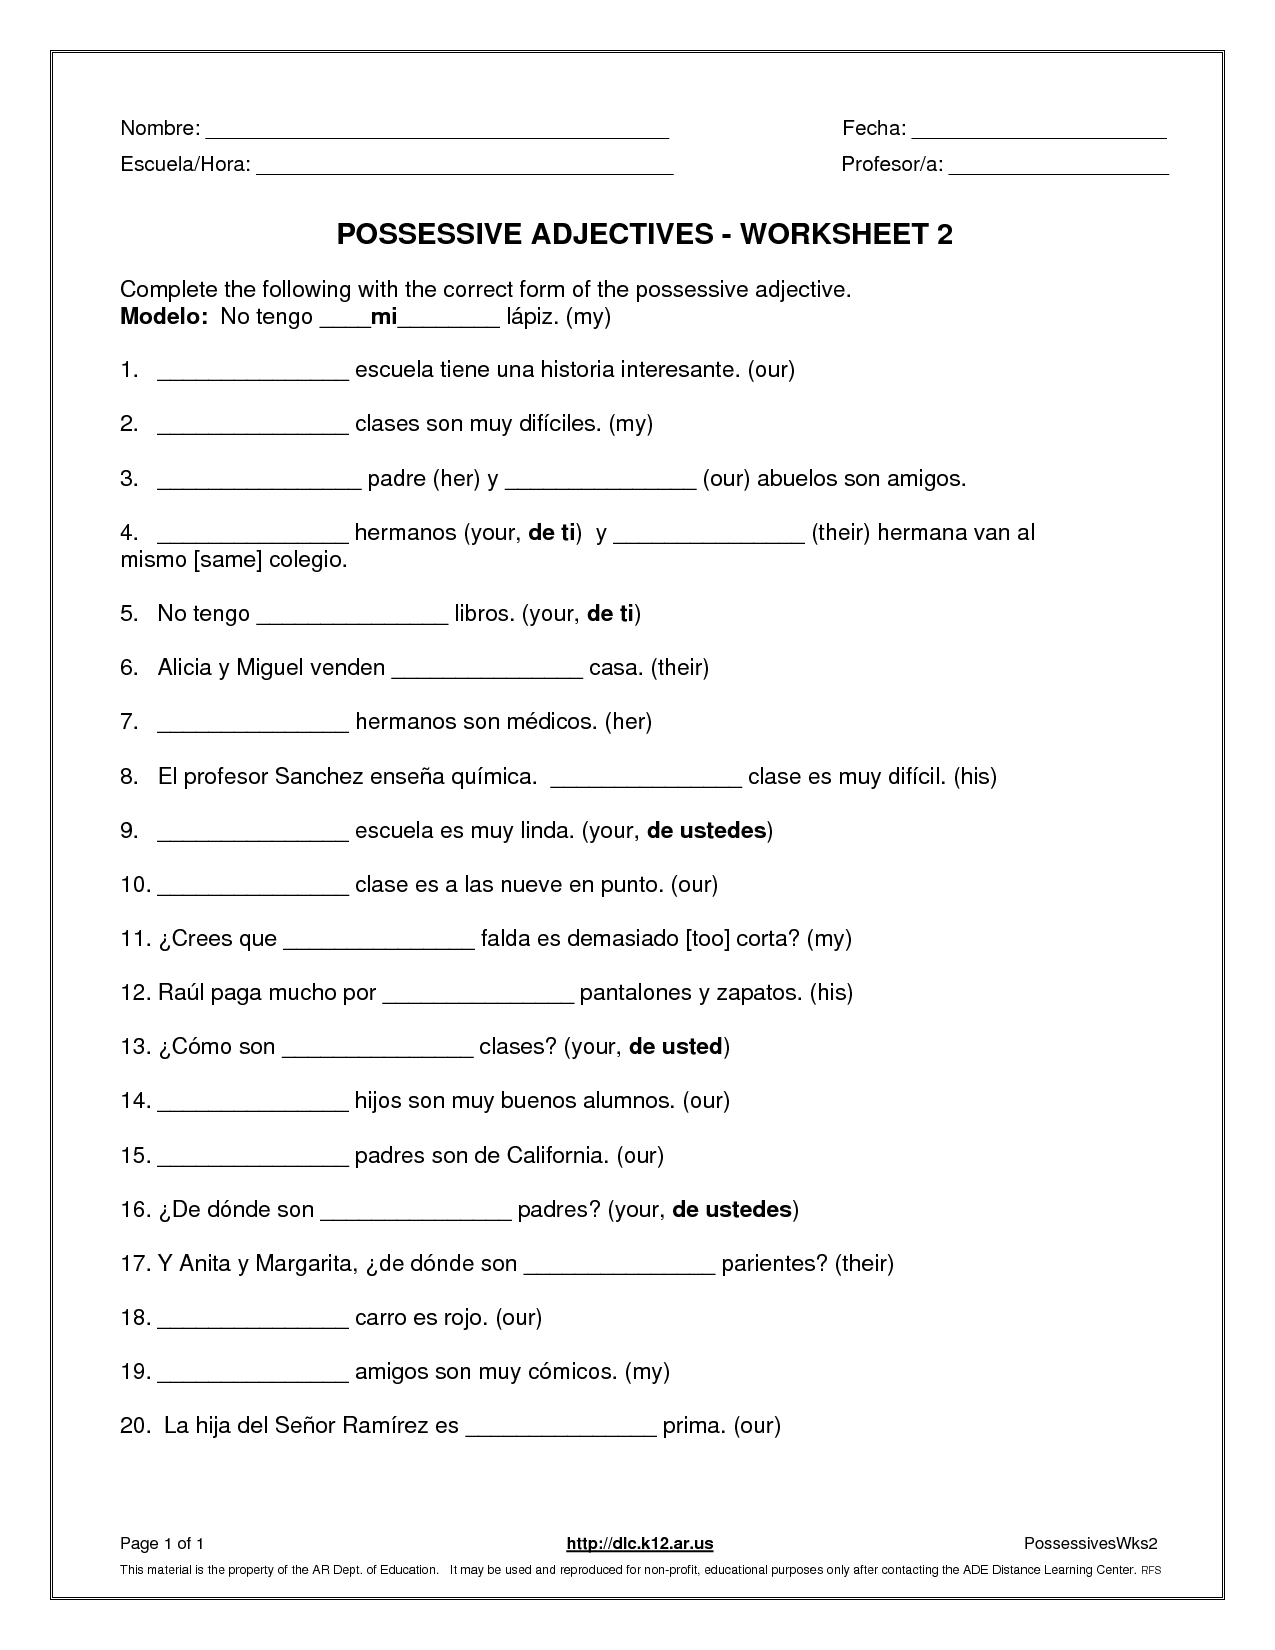 revision-demonstrative-pronouns-demonstrative-pronouns-pronoun-esl-worksheets